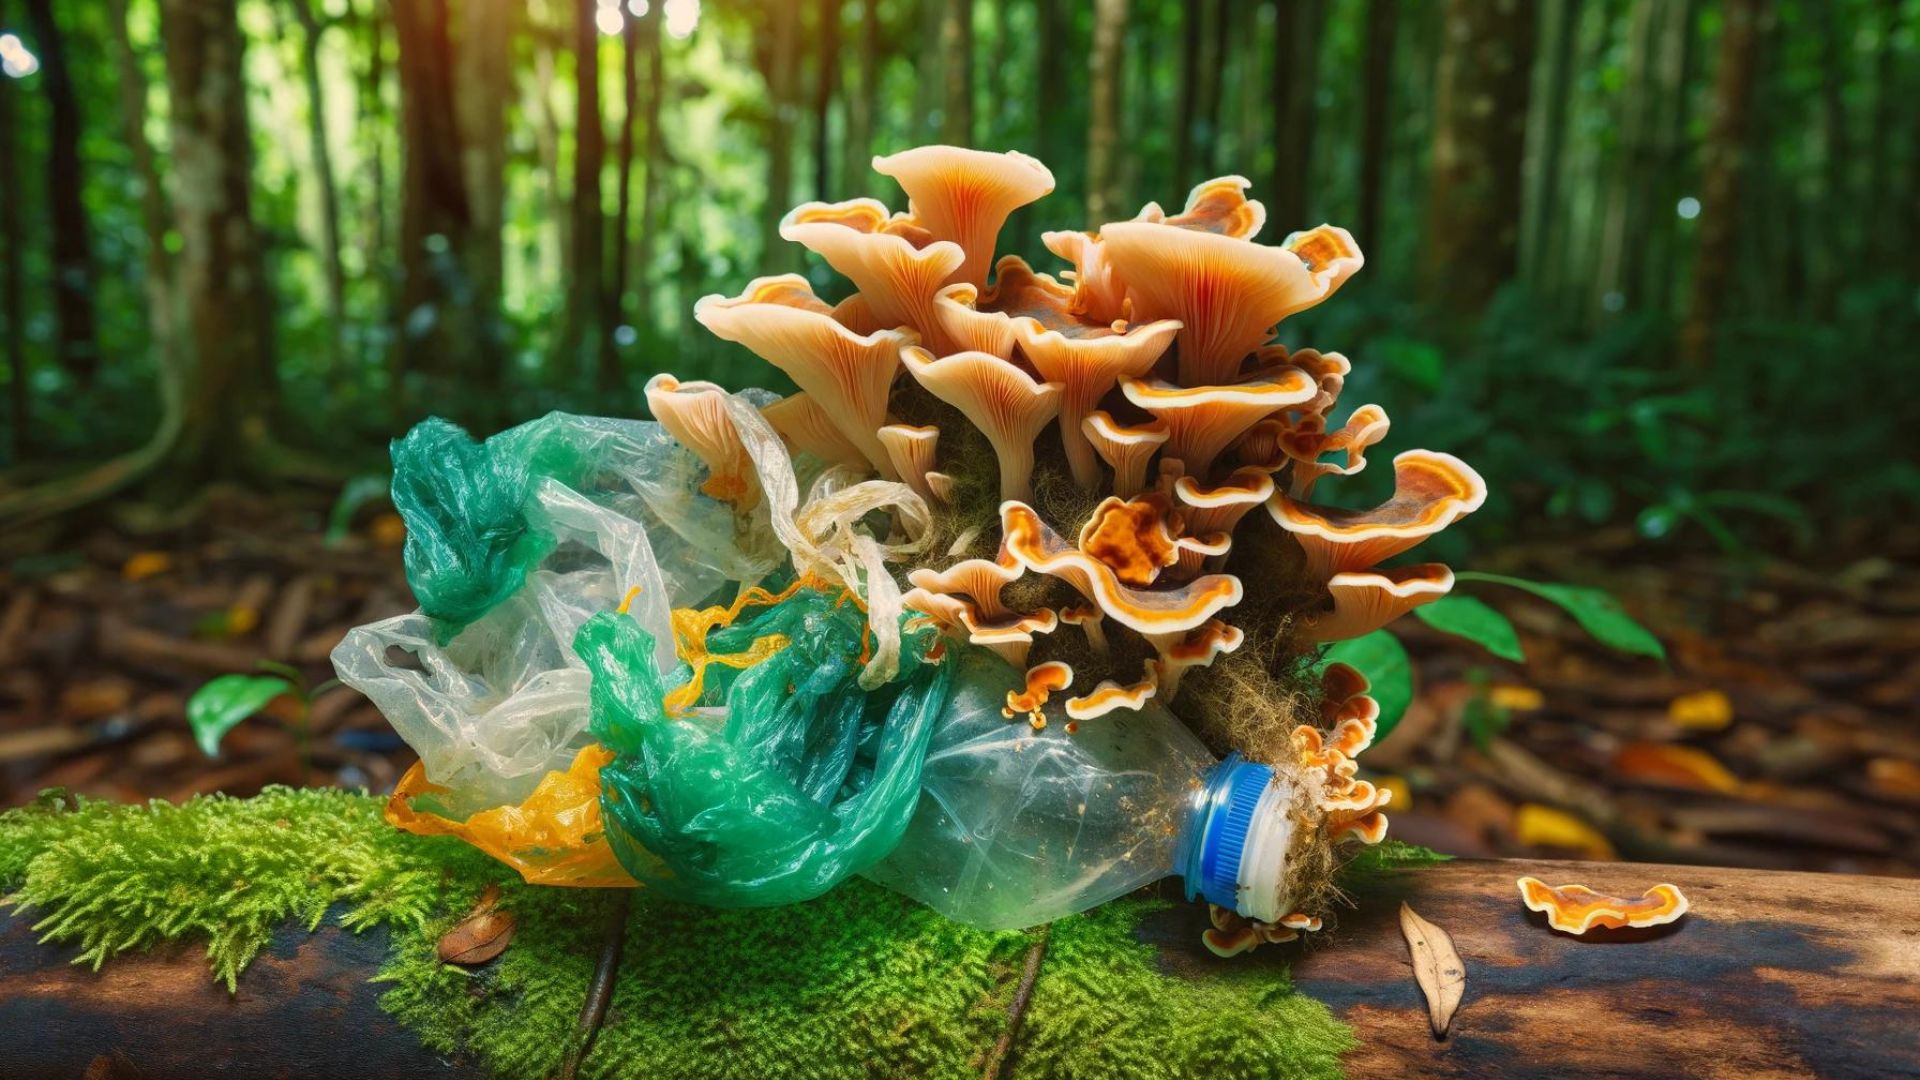 Fungus that can break down plastic